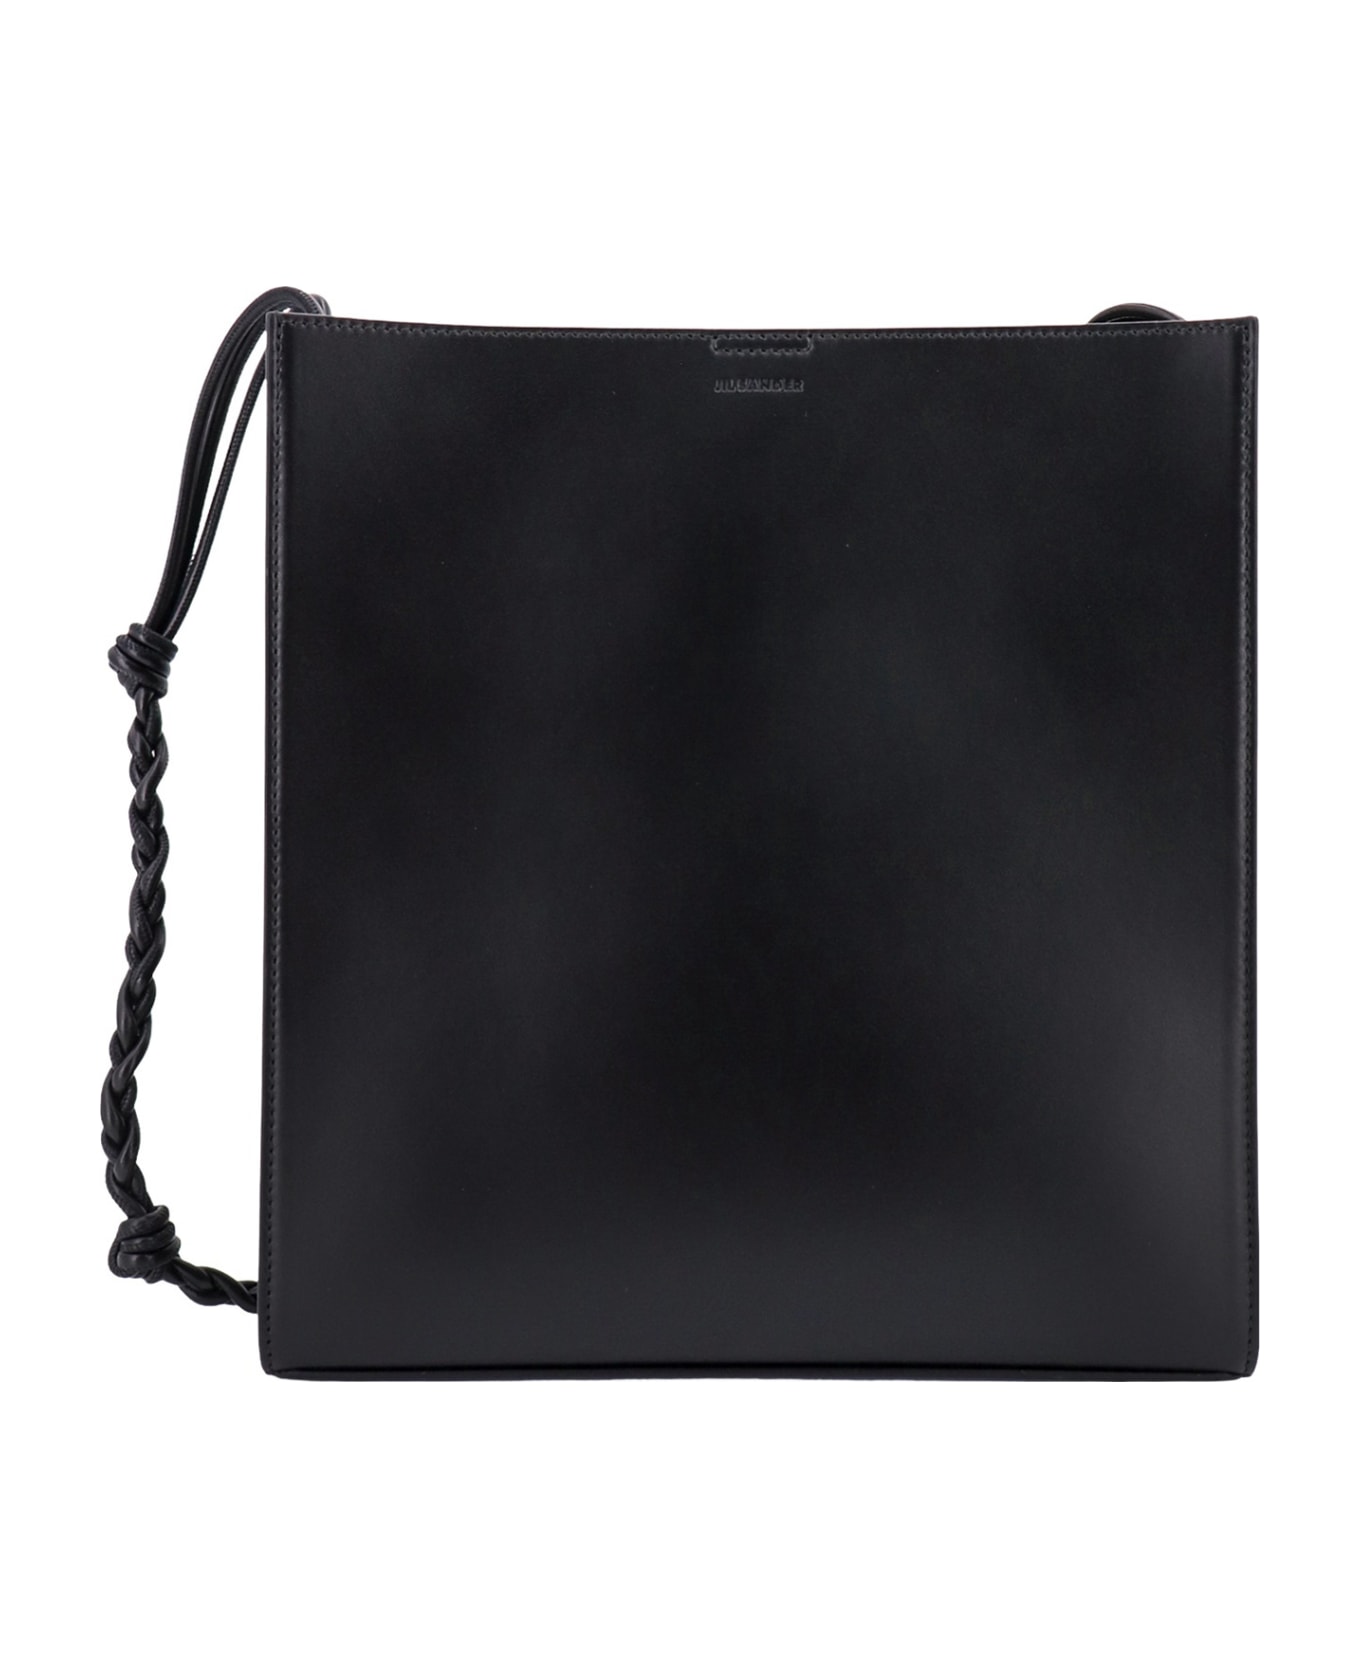 Jil Sander Medium Tangle Bag In Black Leather - 001